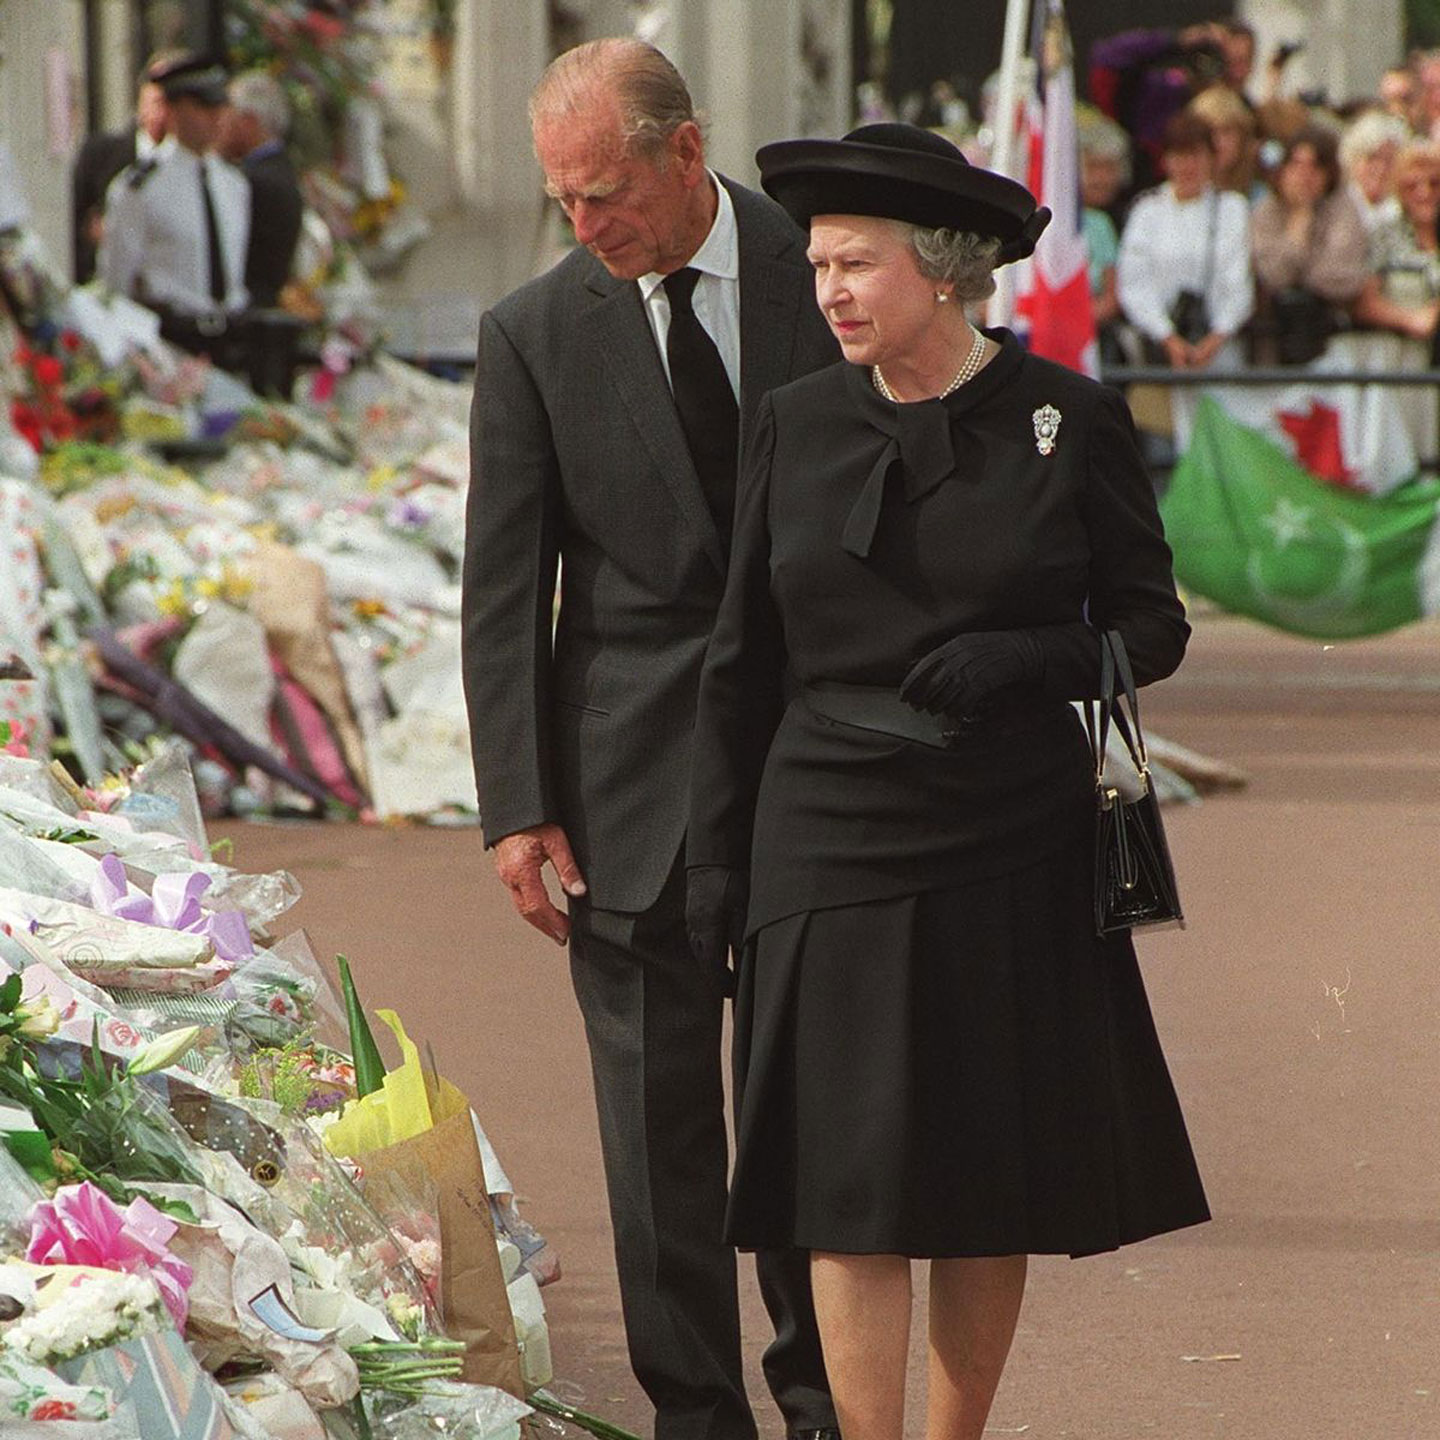 Queen Elizabeth II and the Duke of Edinburgh at Princess Diana's funeralin 1997